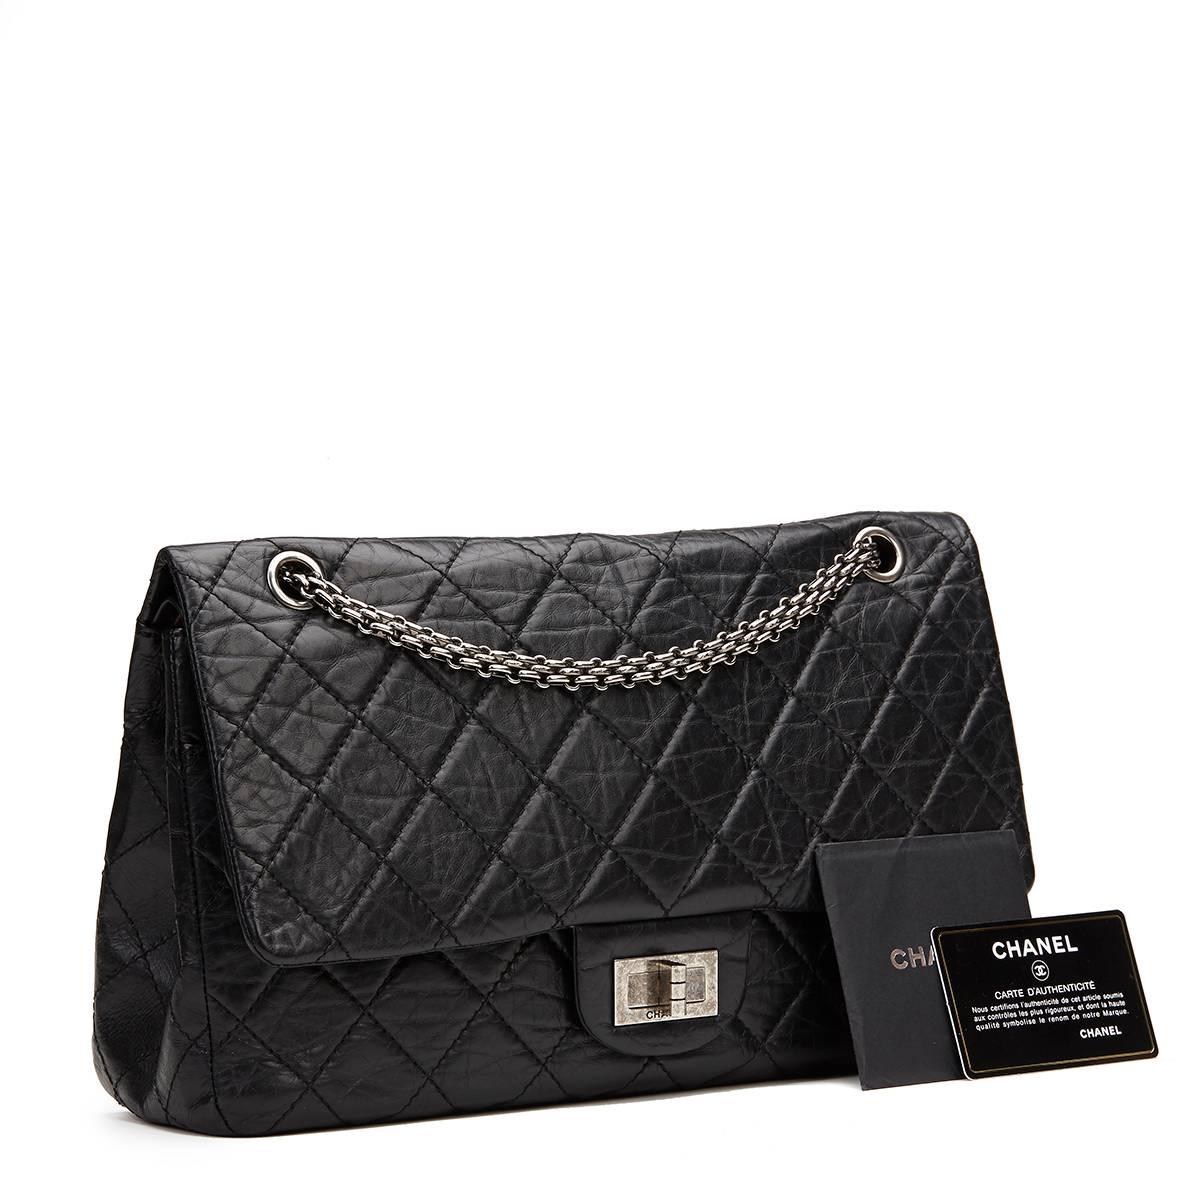 2008 Chanel Black Aged Calfskin 2.55 227 Reissue Flap Bag 6